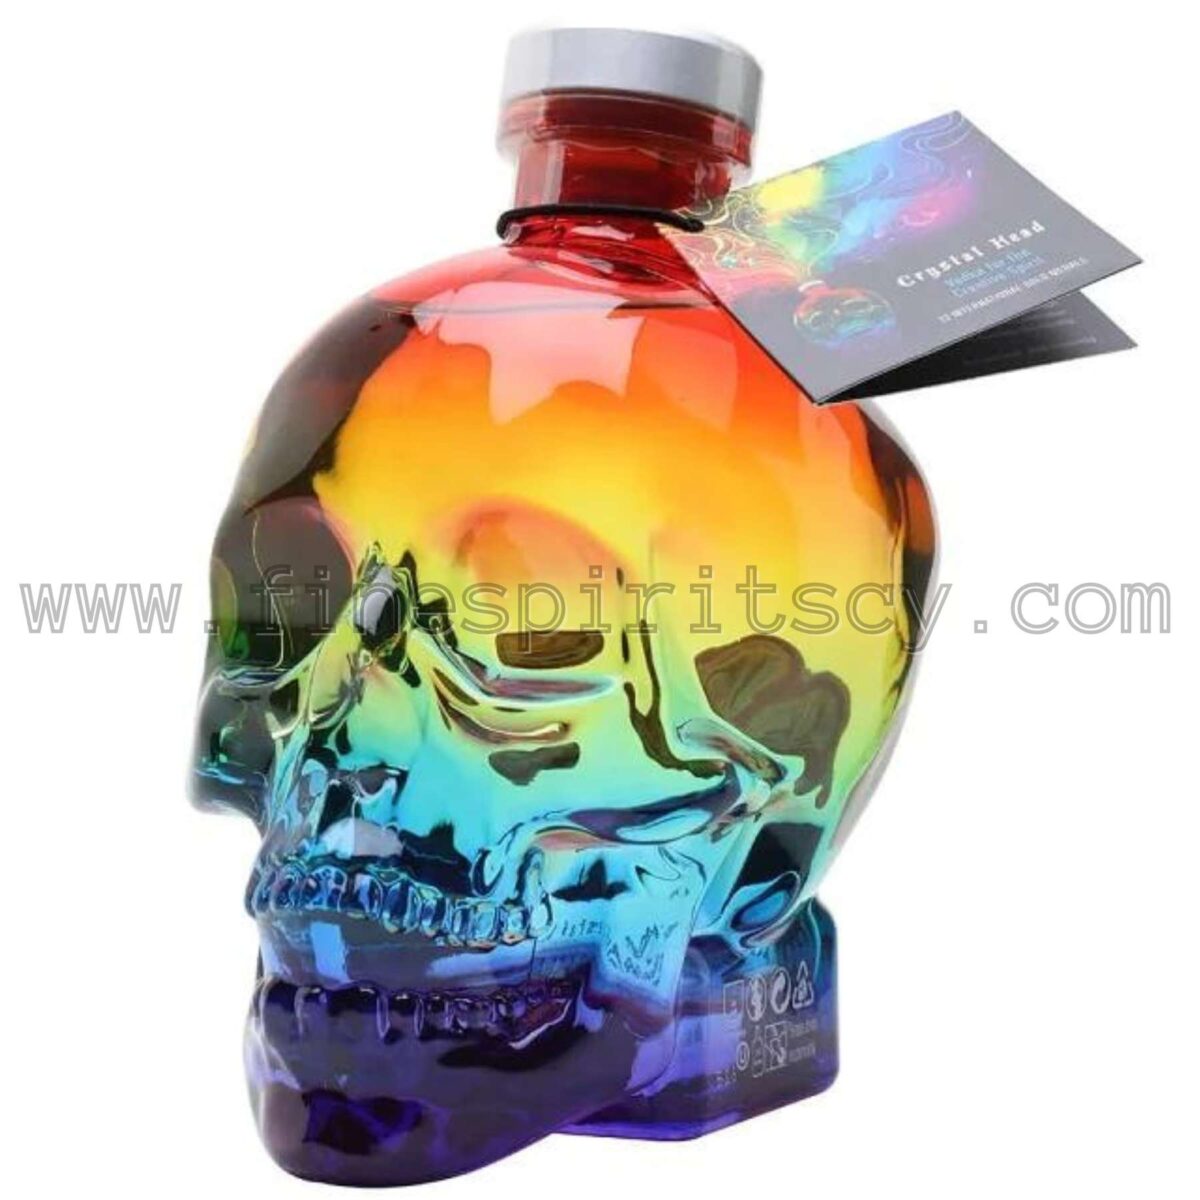 Crystal Head Pride Limited Edition Skull Vodka Cyprus Order Online Buy Shop Now